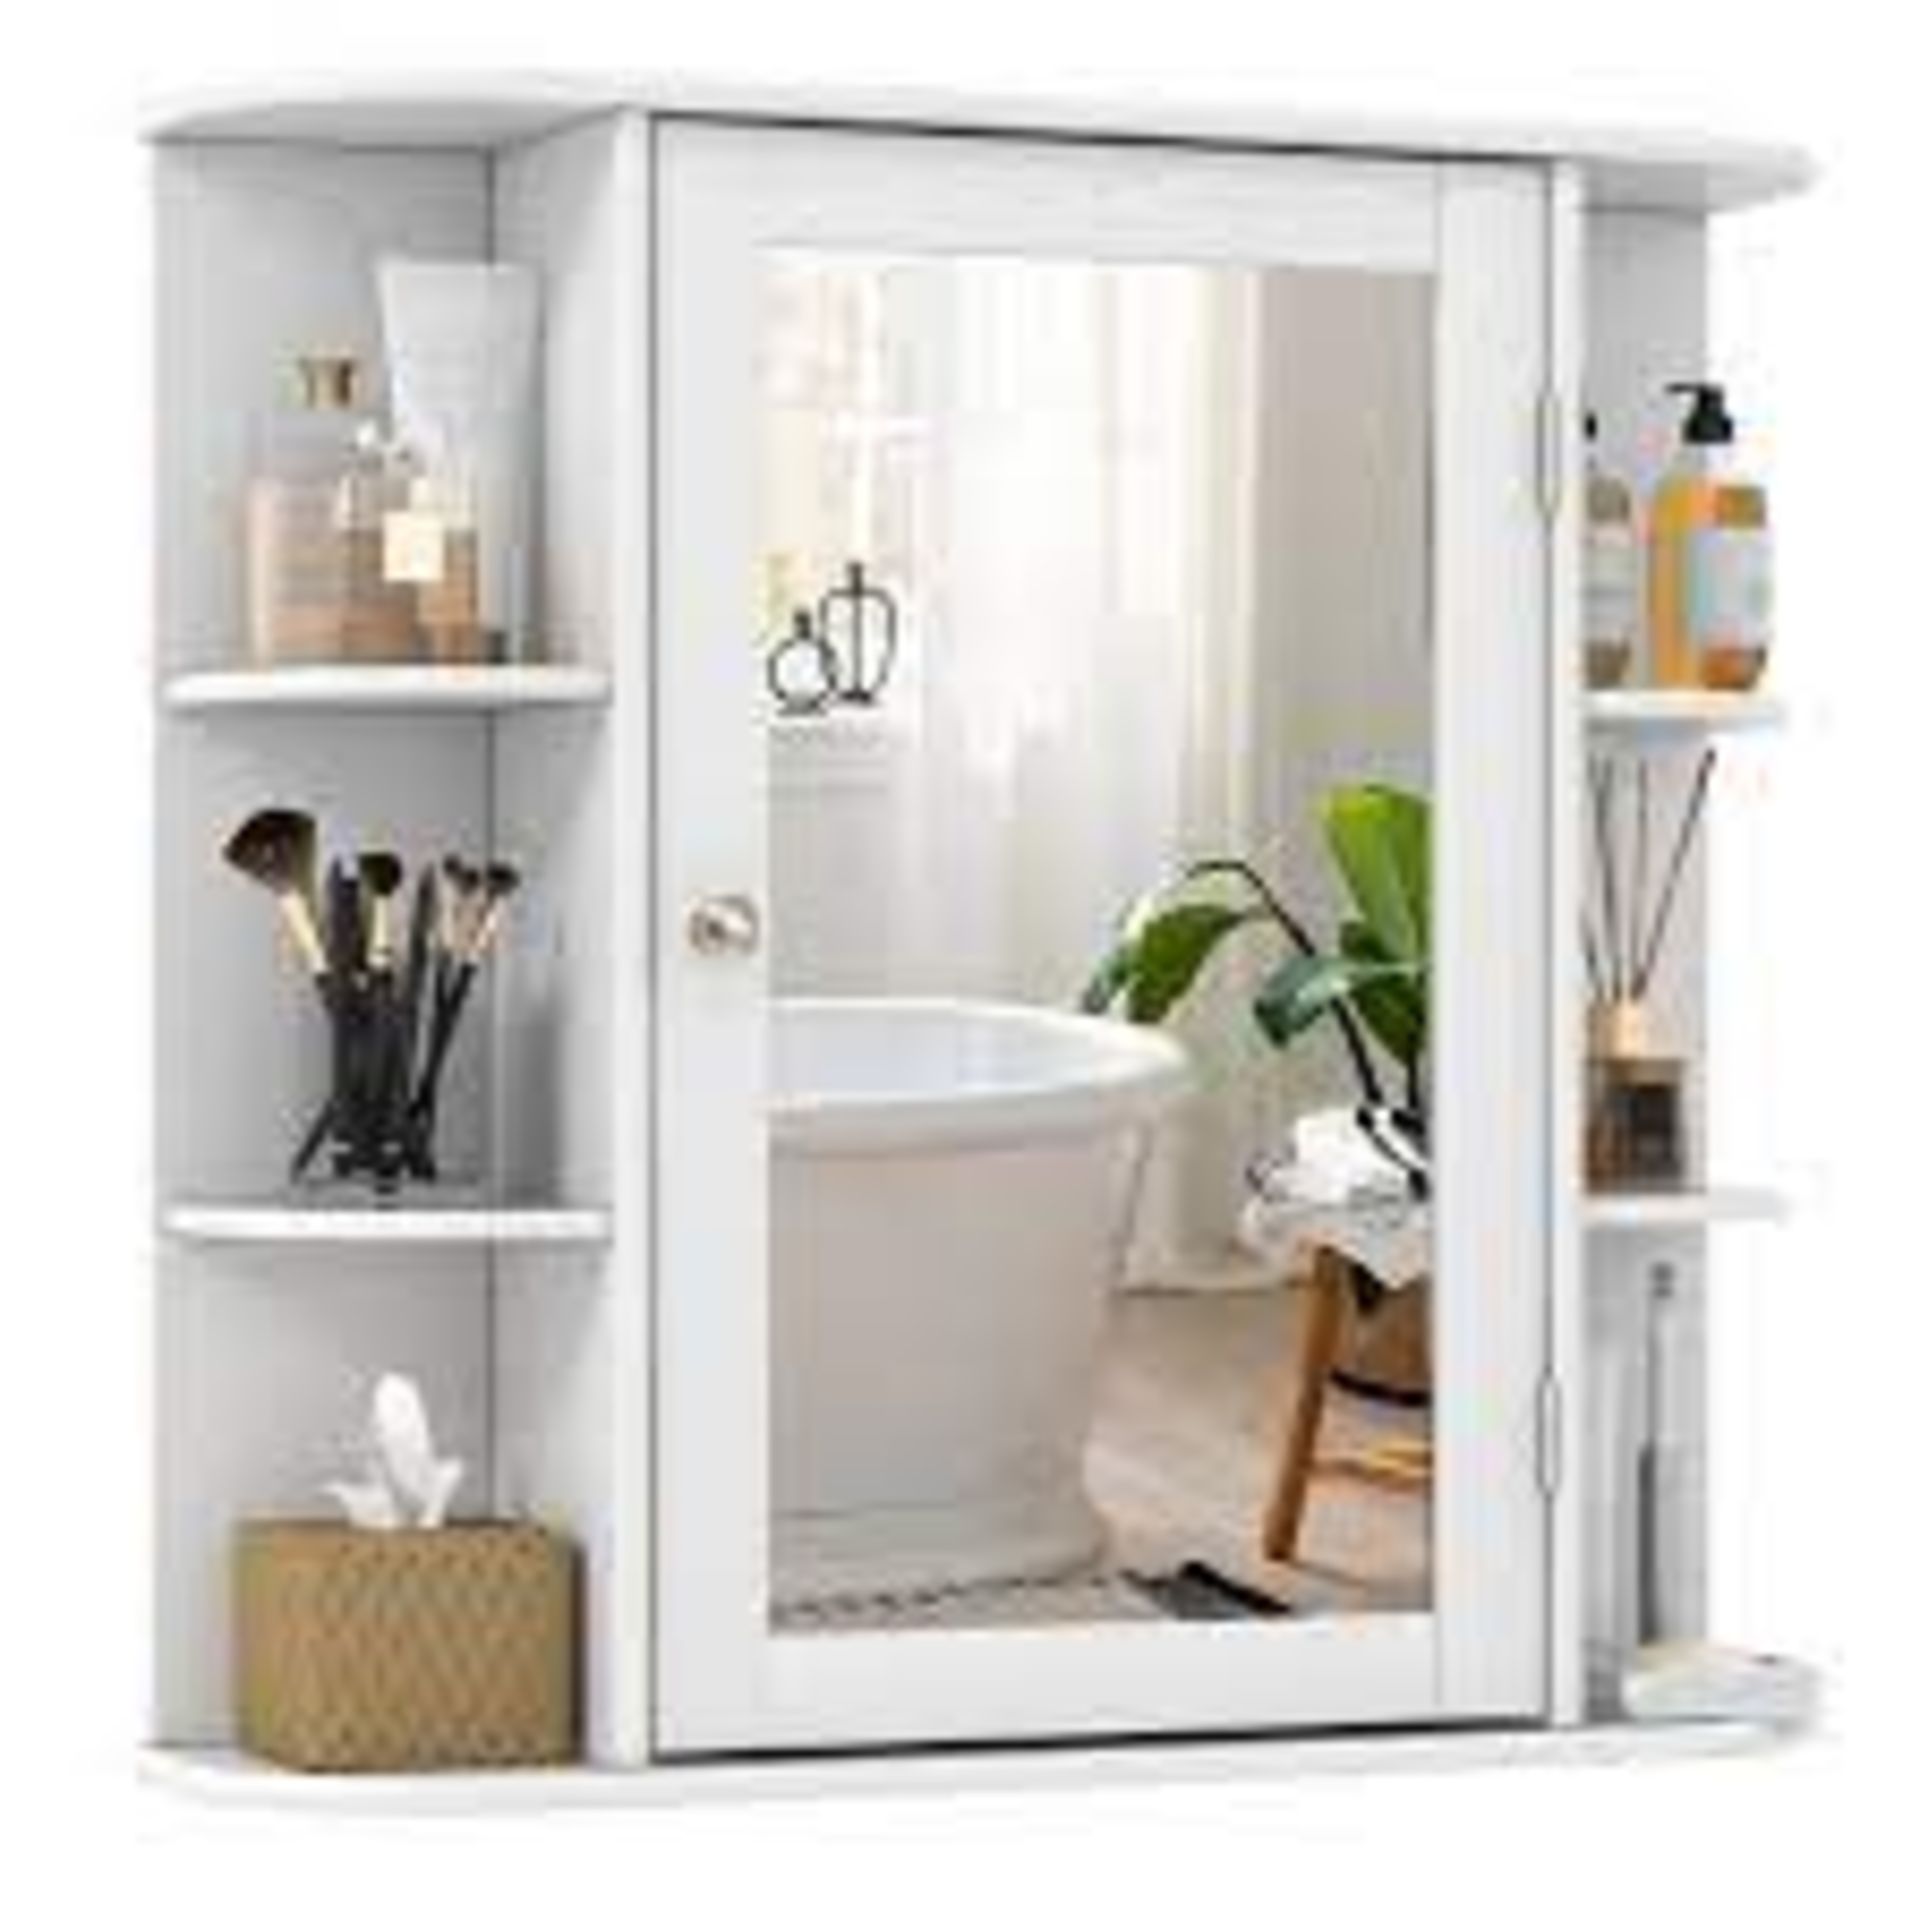 Mirrored Bathroom Medicine Cabinet - Wall Mounted Bathroom - ER53